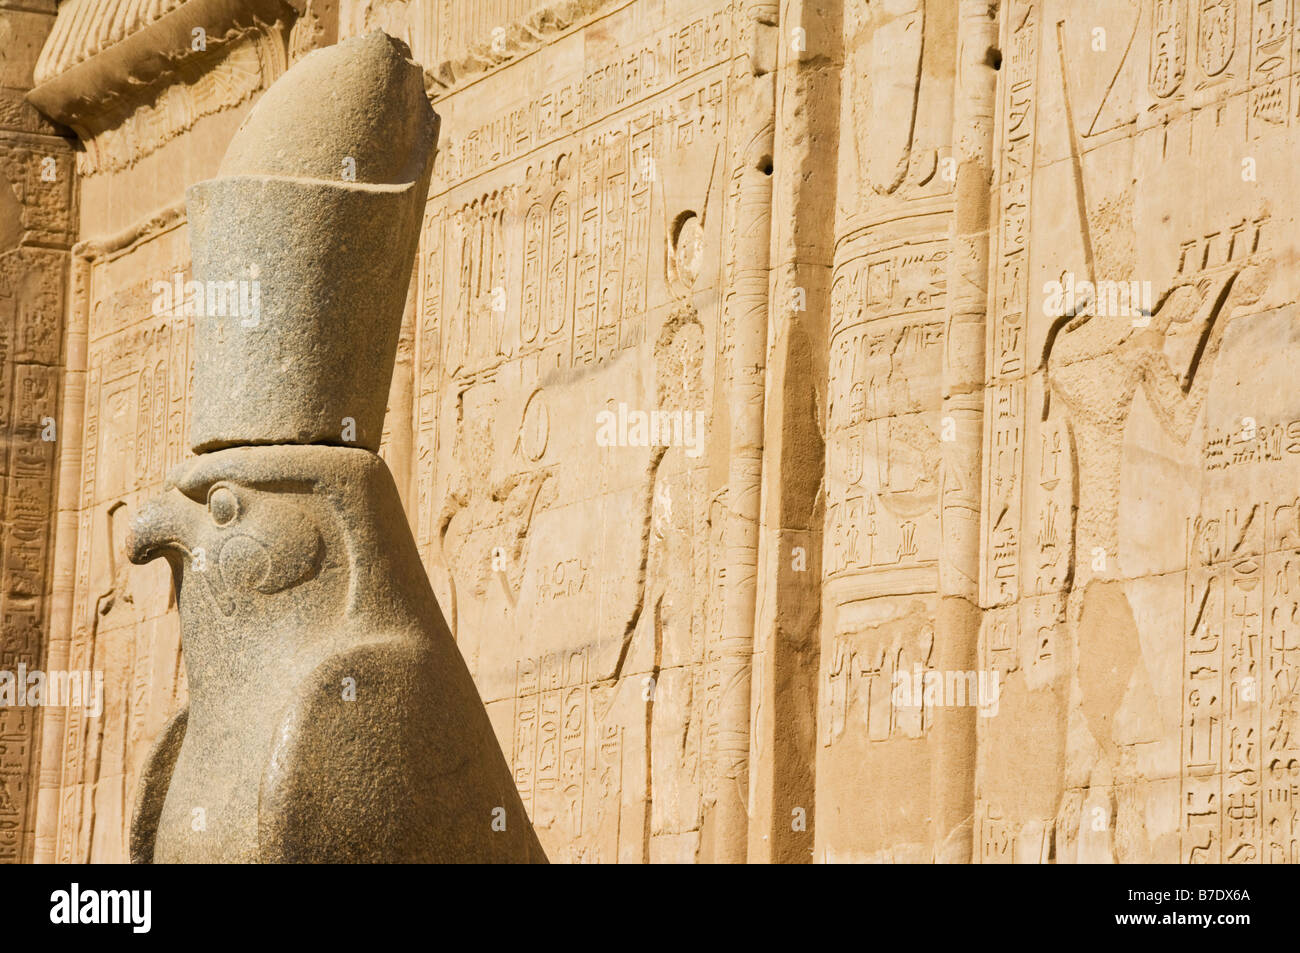 A statue of the Horus falcon outside the sandstone Temple of Horus at Edfu Egypt Middle East Stock Photo